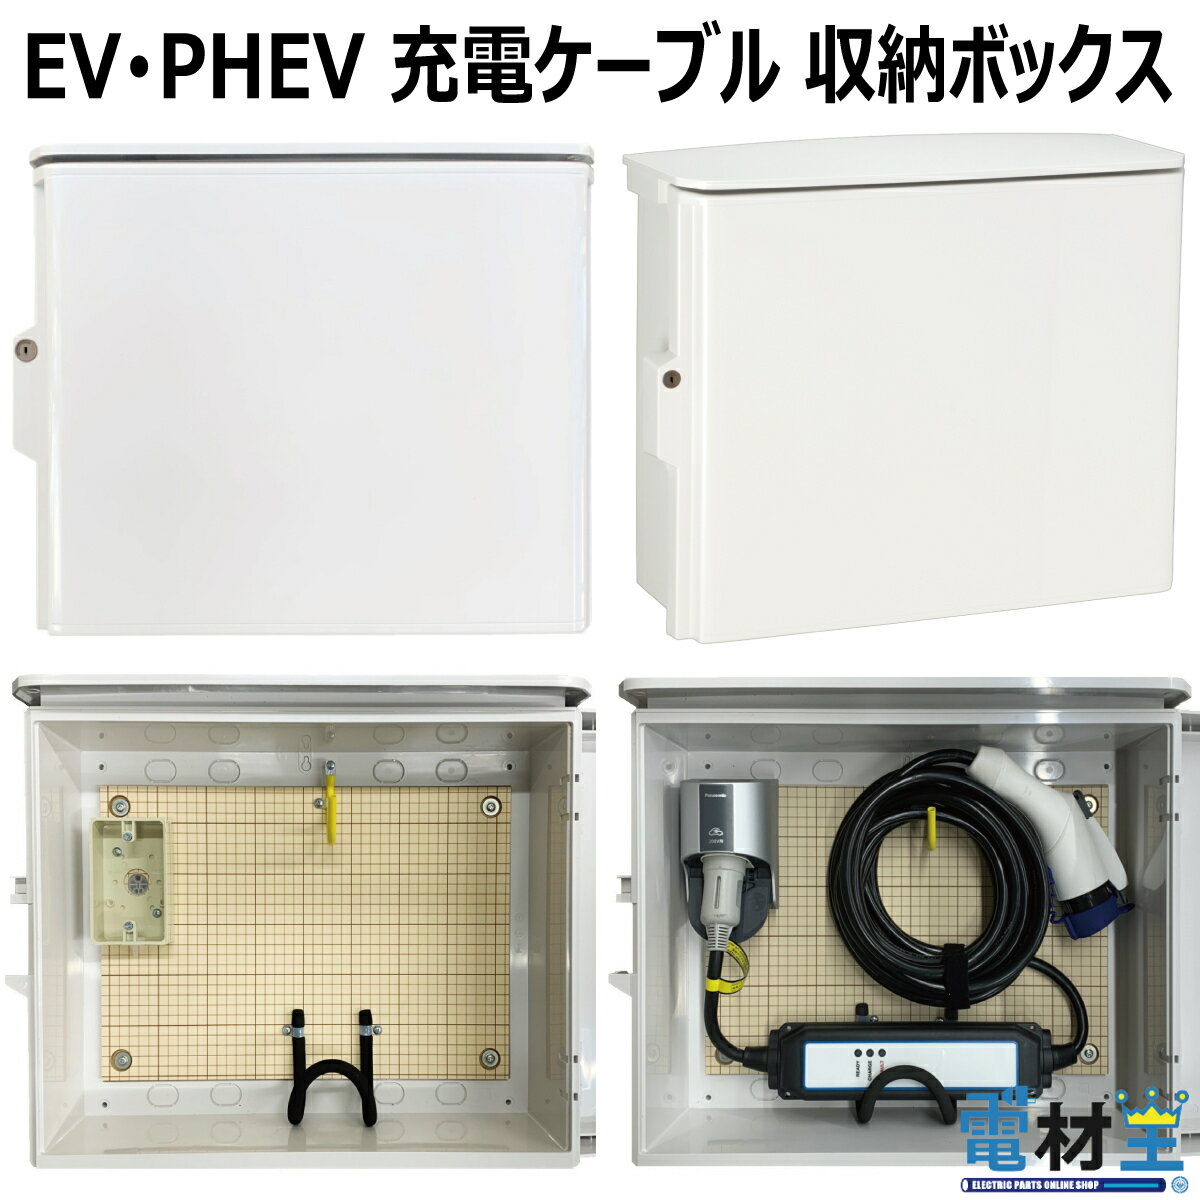 EV PHEV用 充電ケーブル コンセント 収納 ボックス D-EVBOX54A 電気自動車 充電 ケーブル収納 ボックス